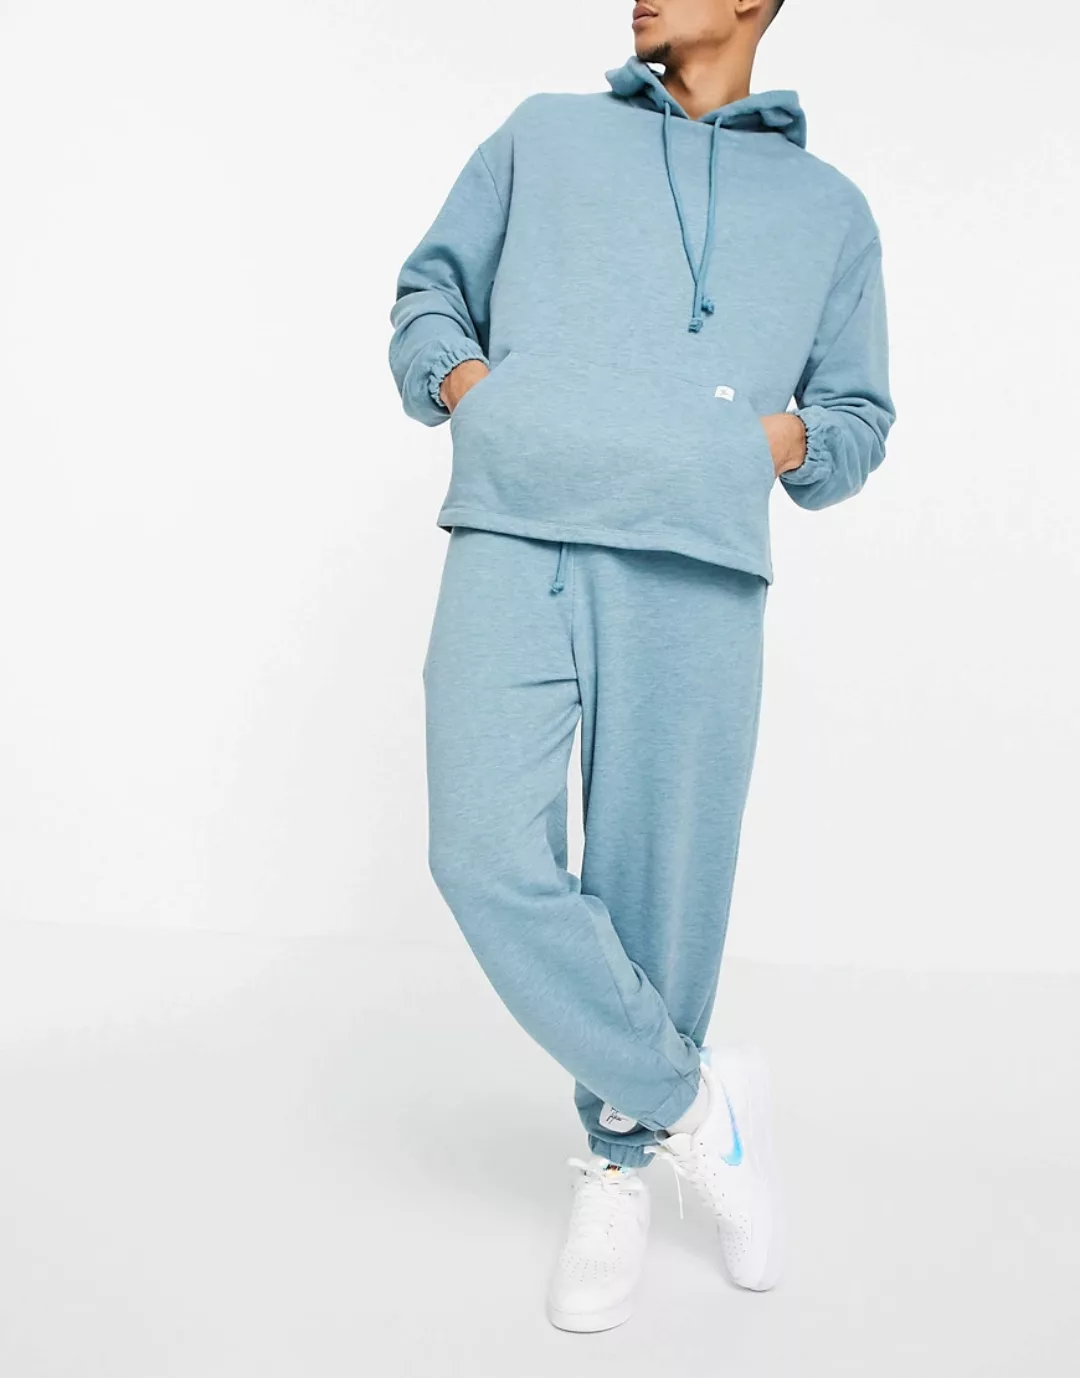 ASOS – Dark Future – Oversize-Jogginghose in überfärbtem, hellem Blaugrau, günstig online kaufen